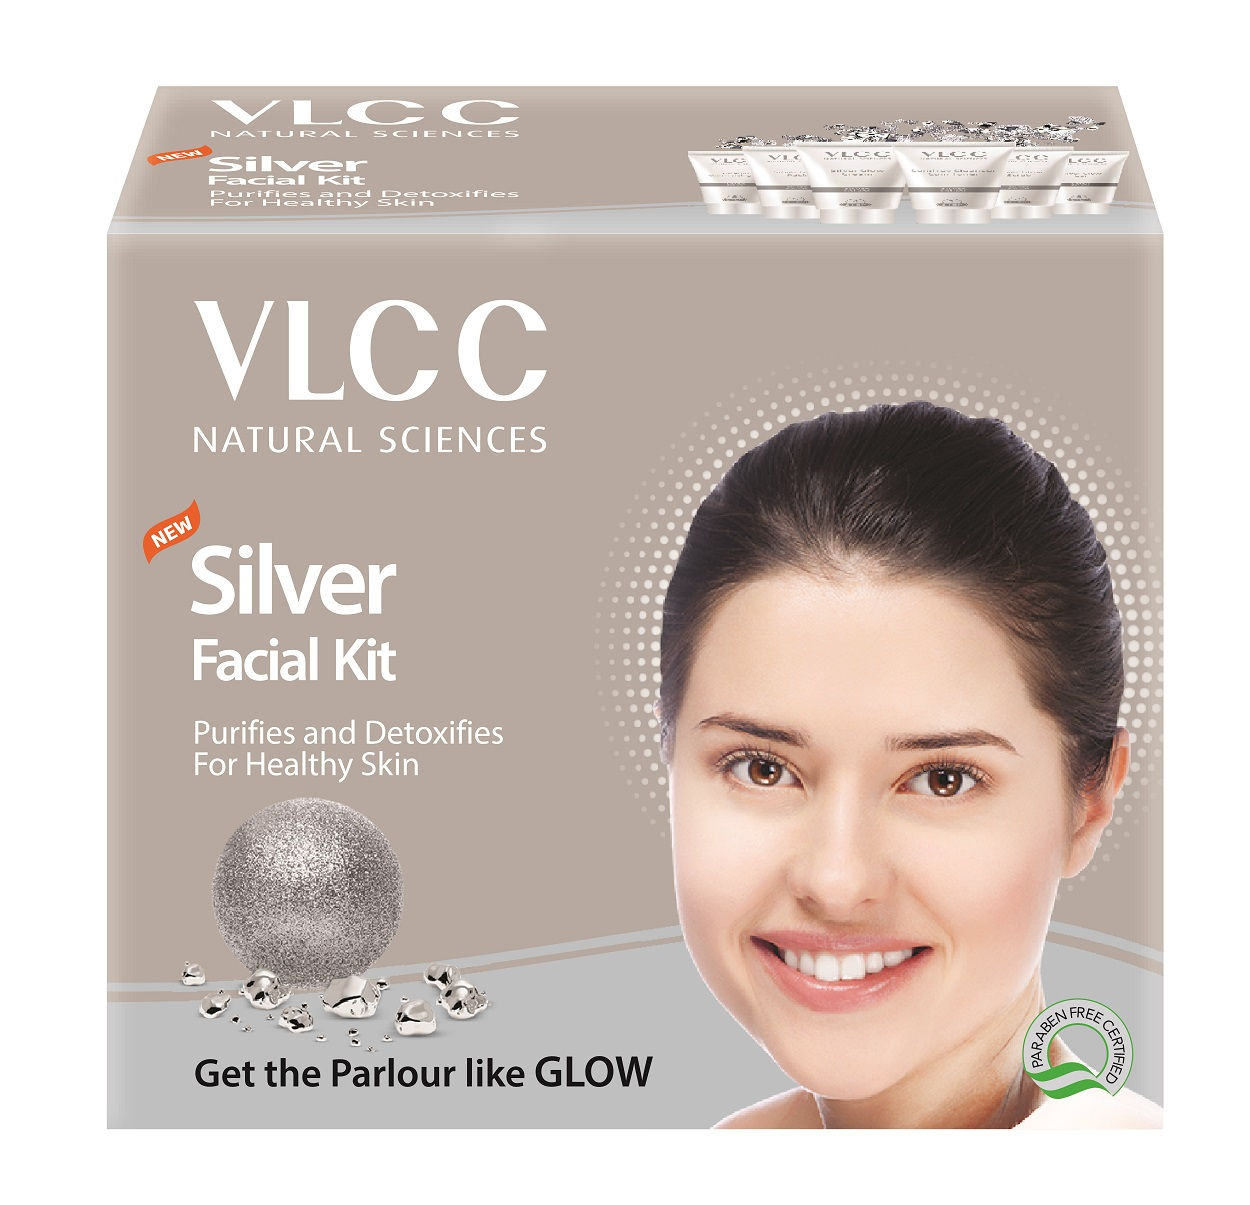 VLCC Natural Sciences Silver Facial Kit Purifies and Detoxifies for Healthy Skin